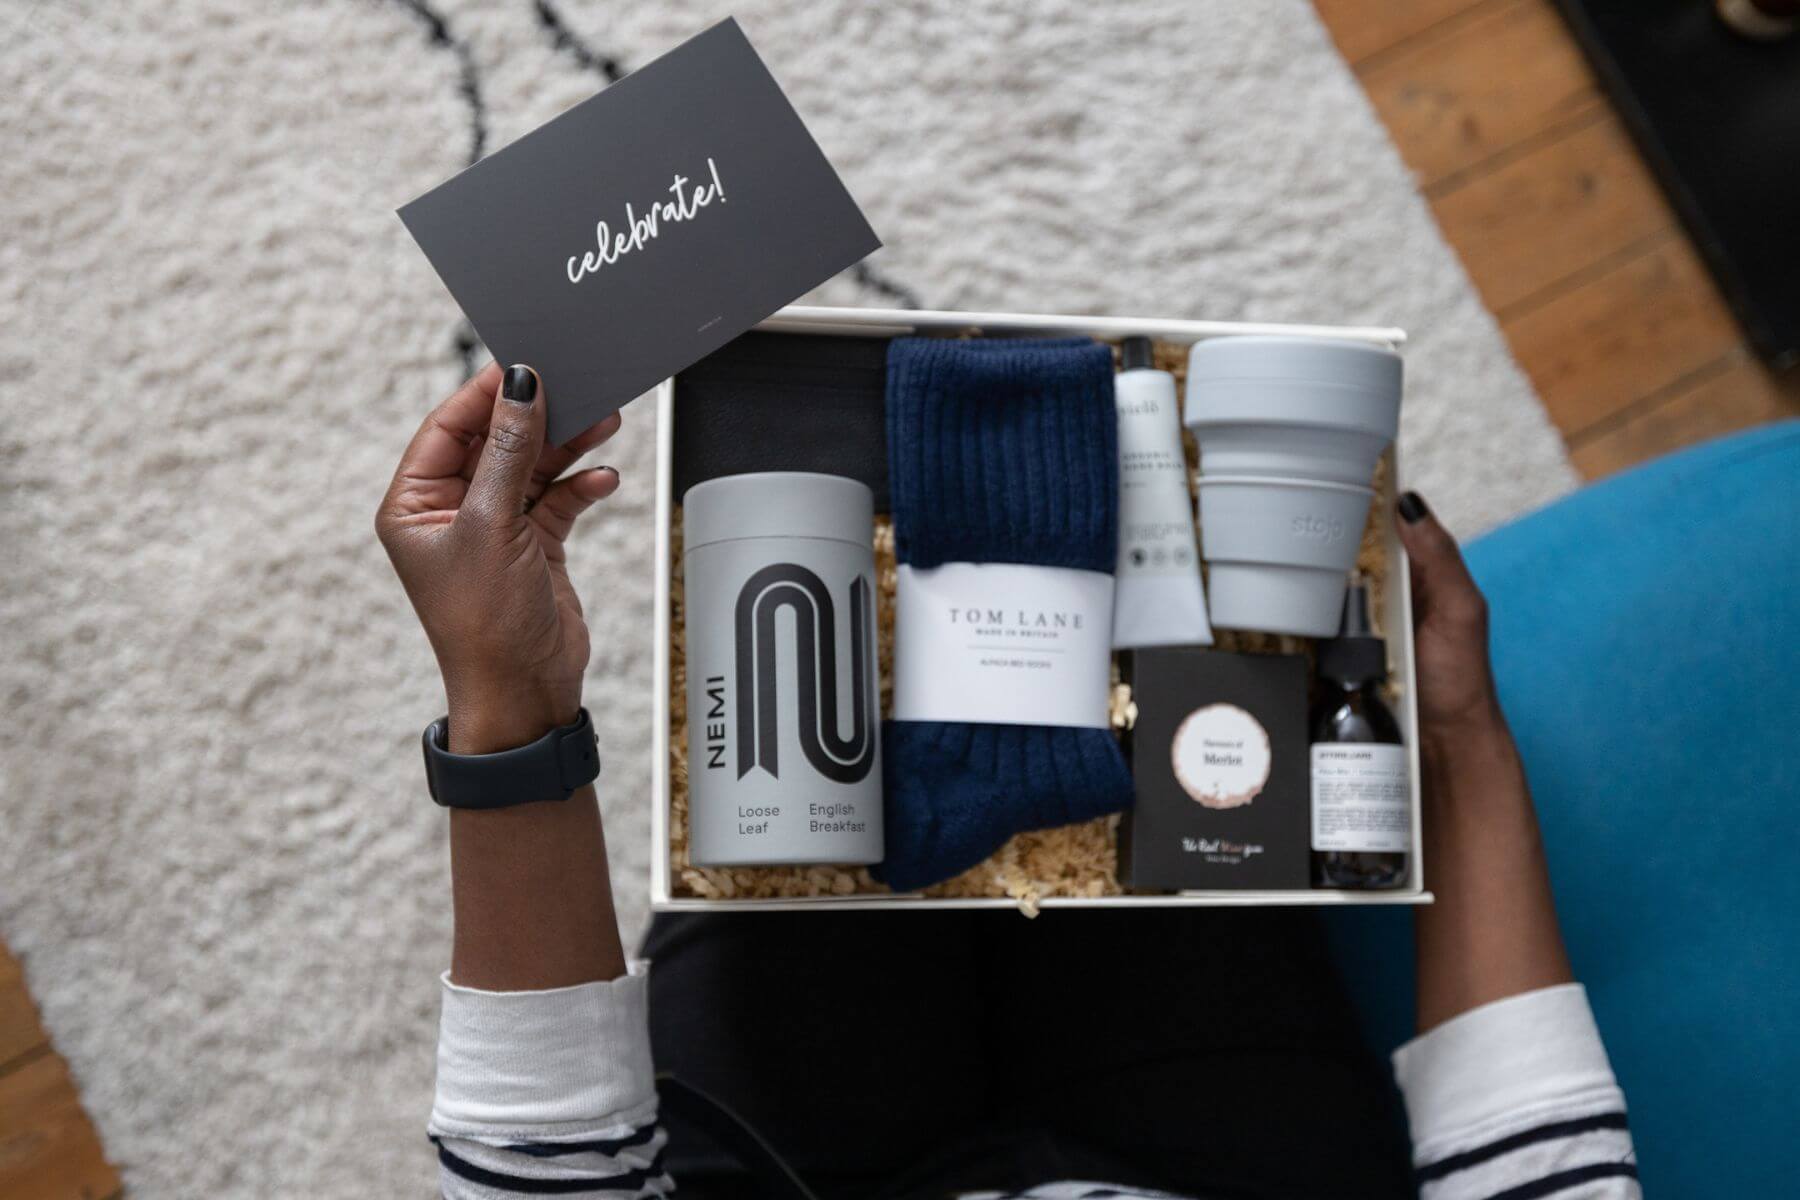 Unique Corporate Gift Ideas of tea, socks, sweets, mug and hand cream